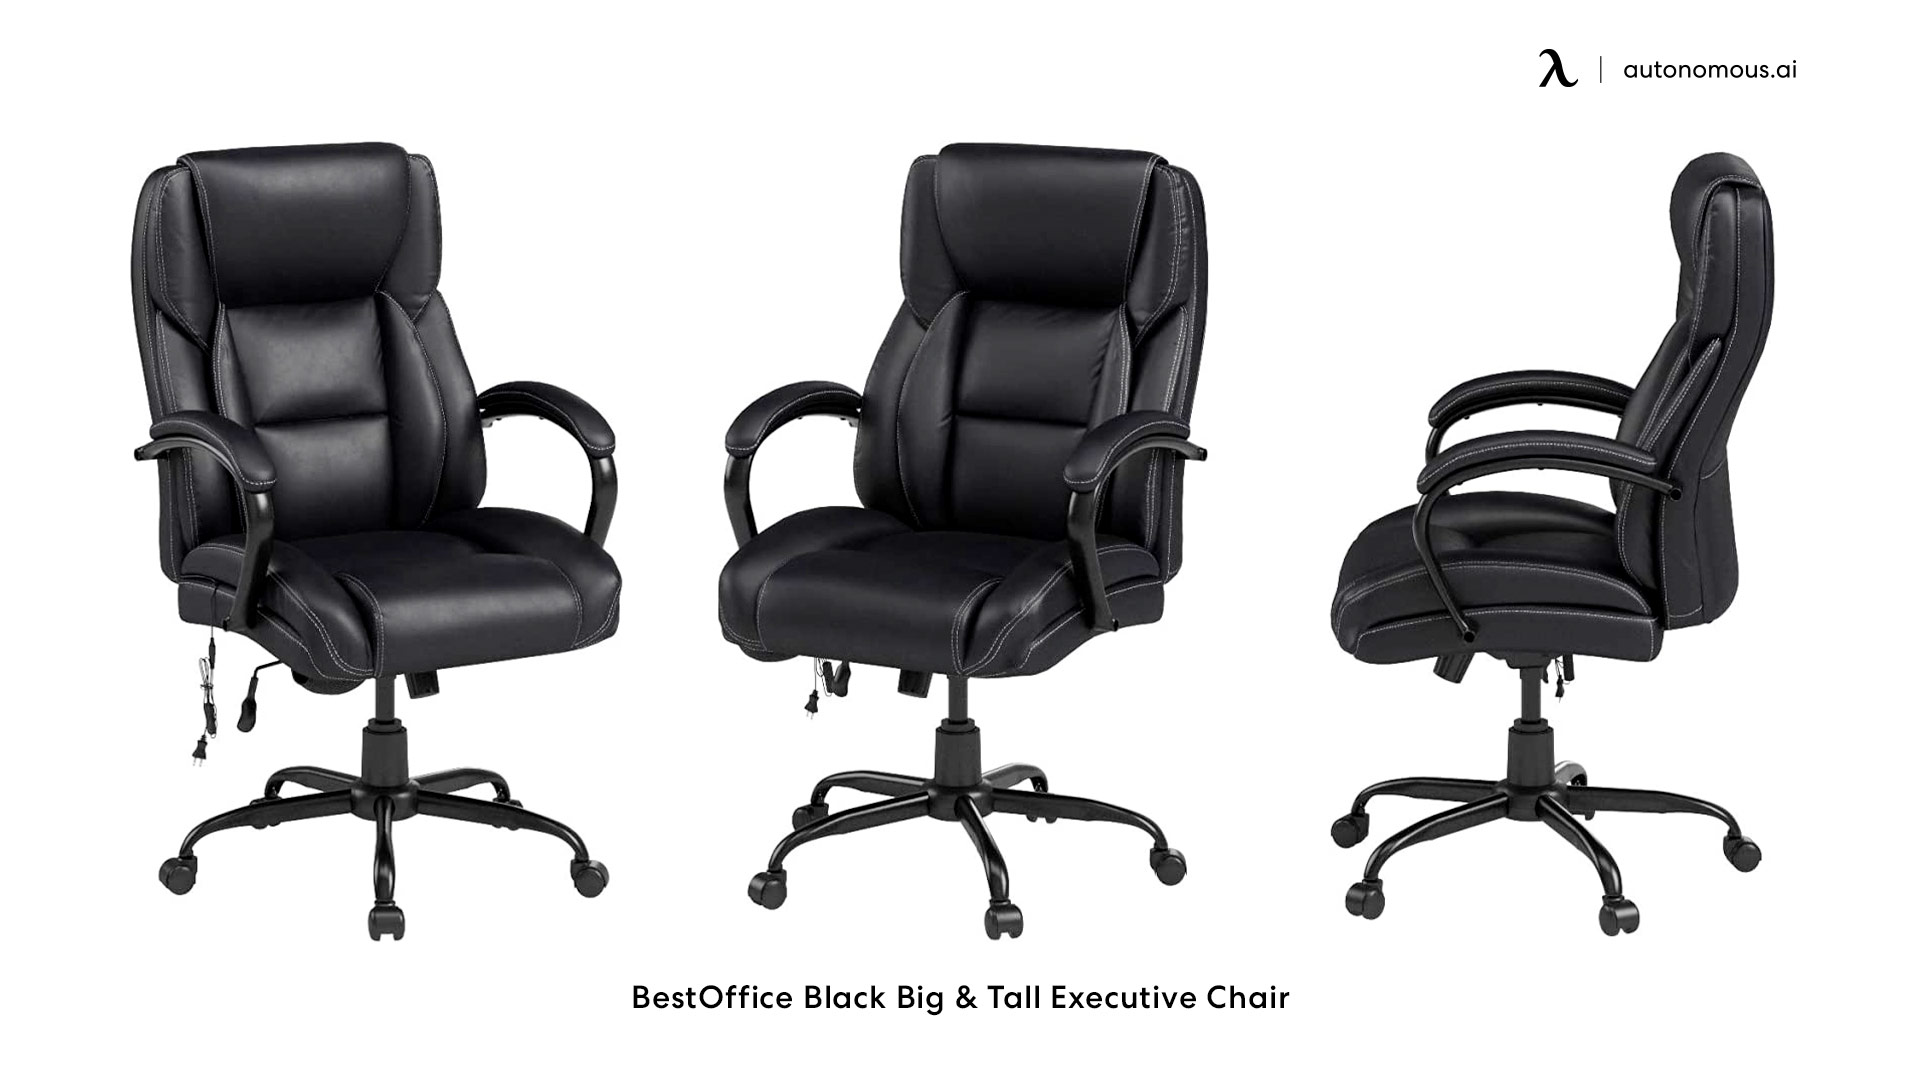 BestOffice Black Big & Tall Executive Chair